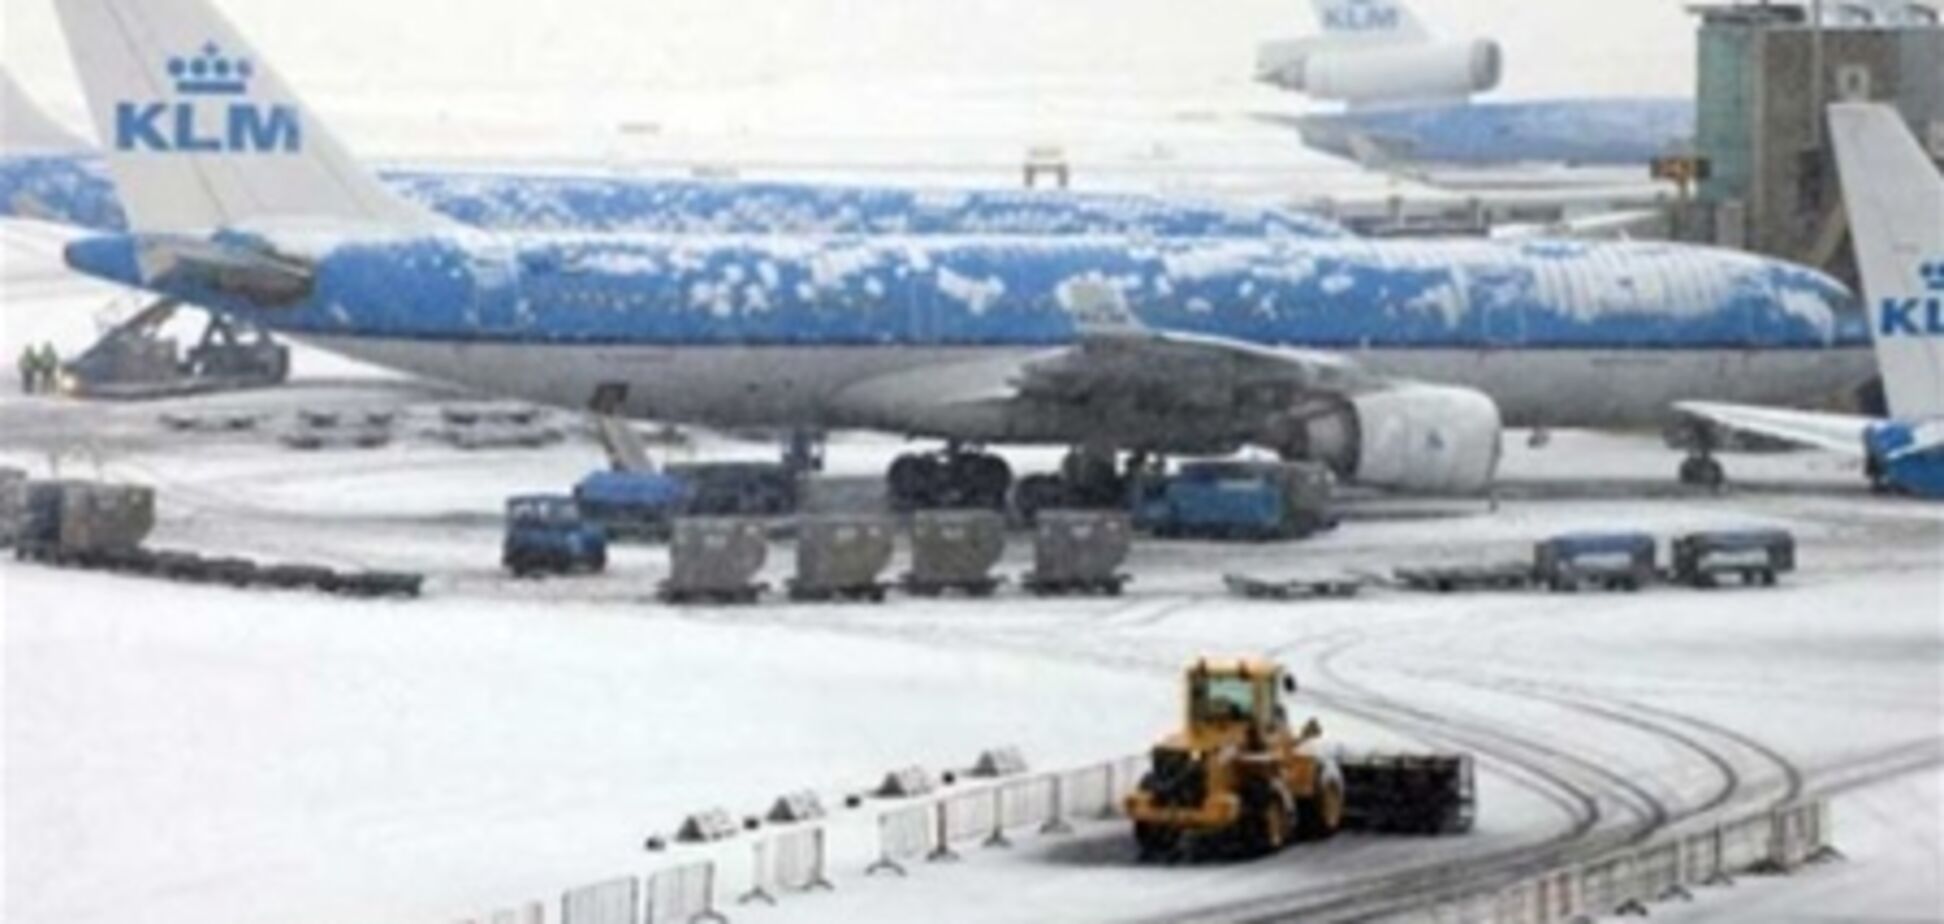 Из-за снега в Париже отменяют около 400 рейсов